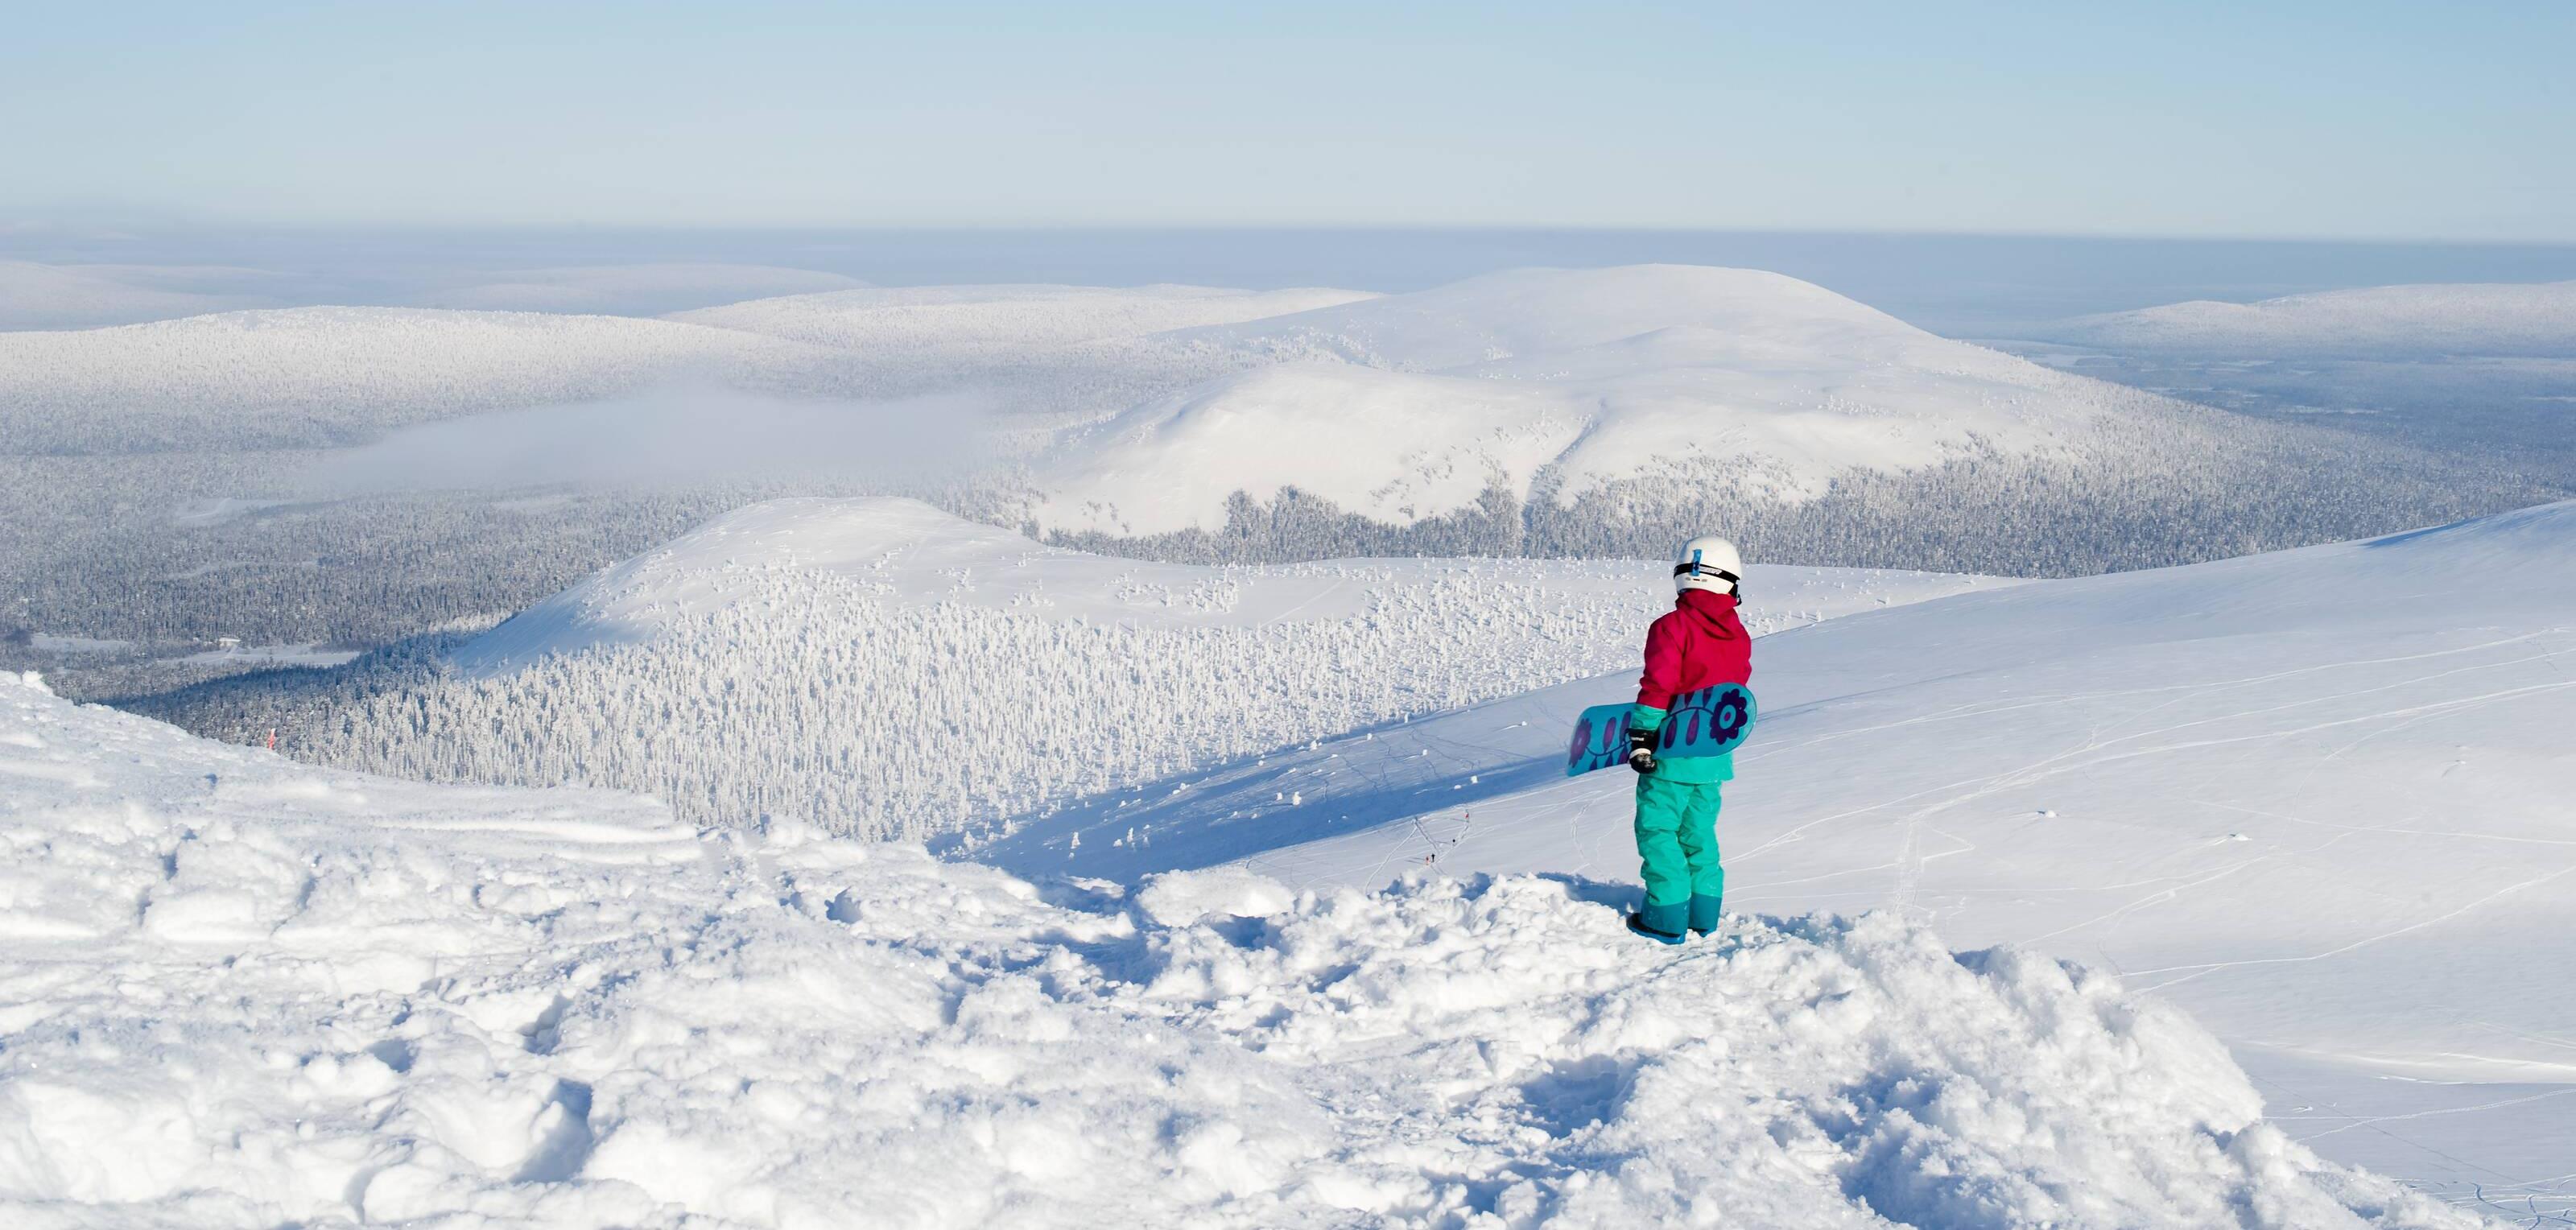 snowboarders admiring a snowy fell landscape